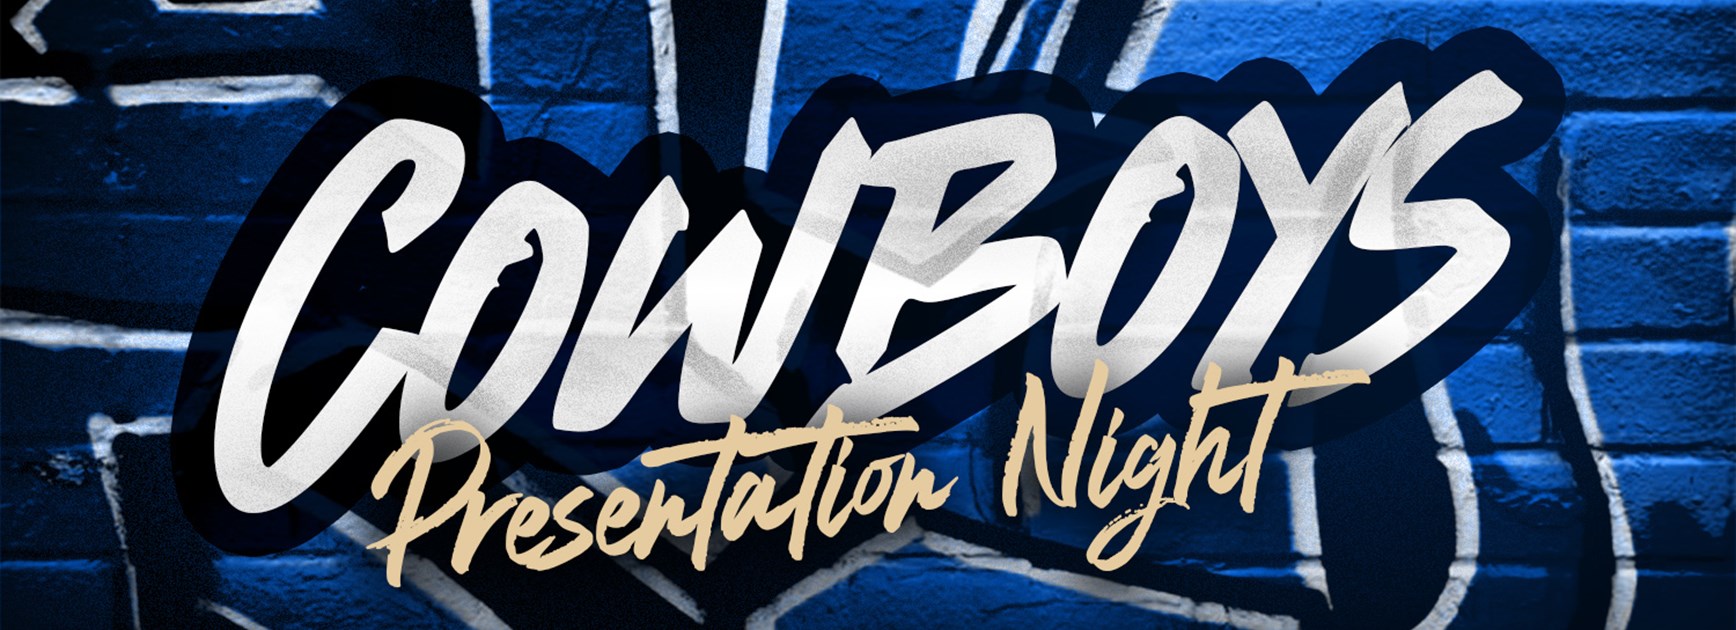 Live updates: Cowboys 2021 Presentation Night